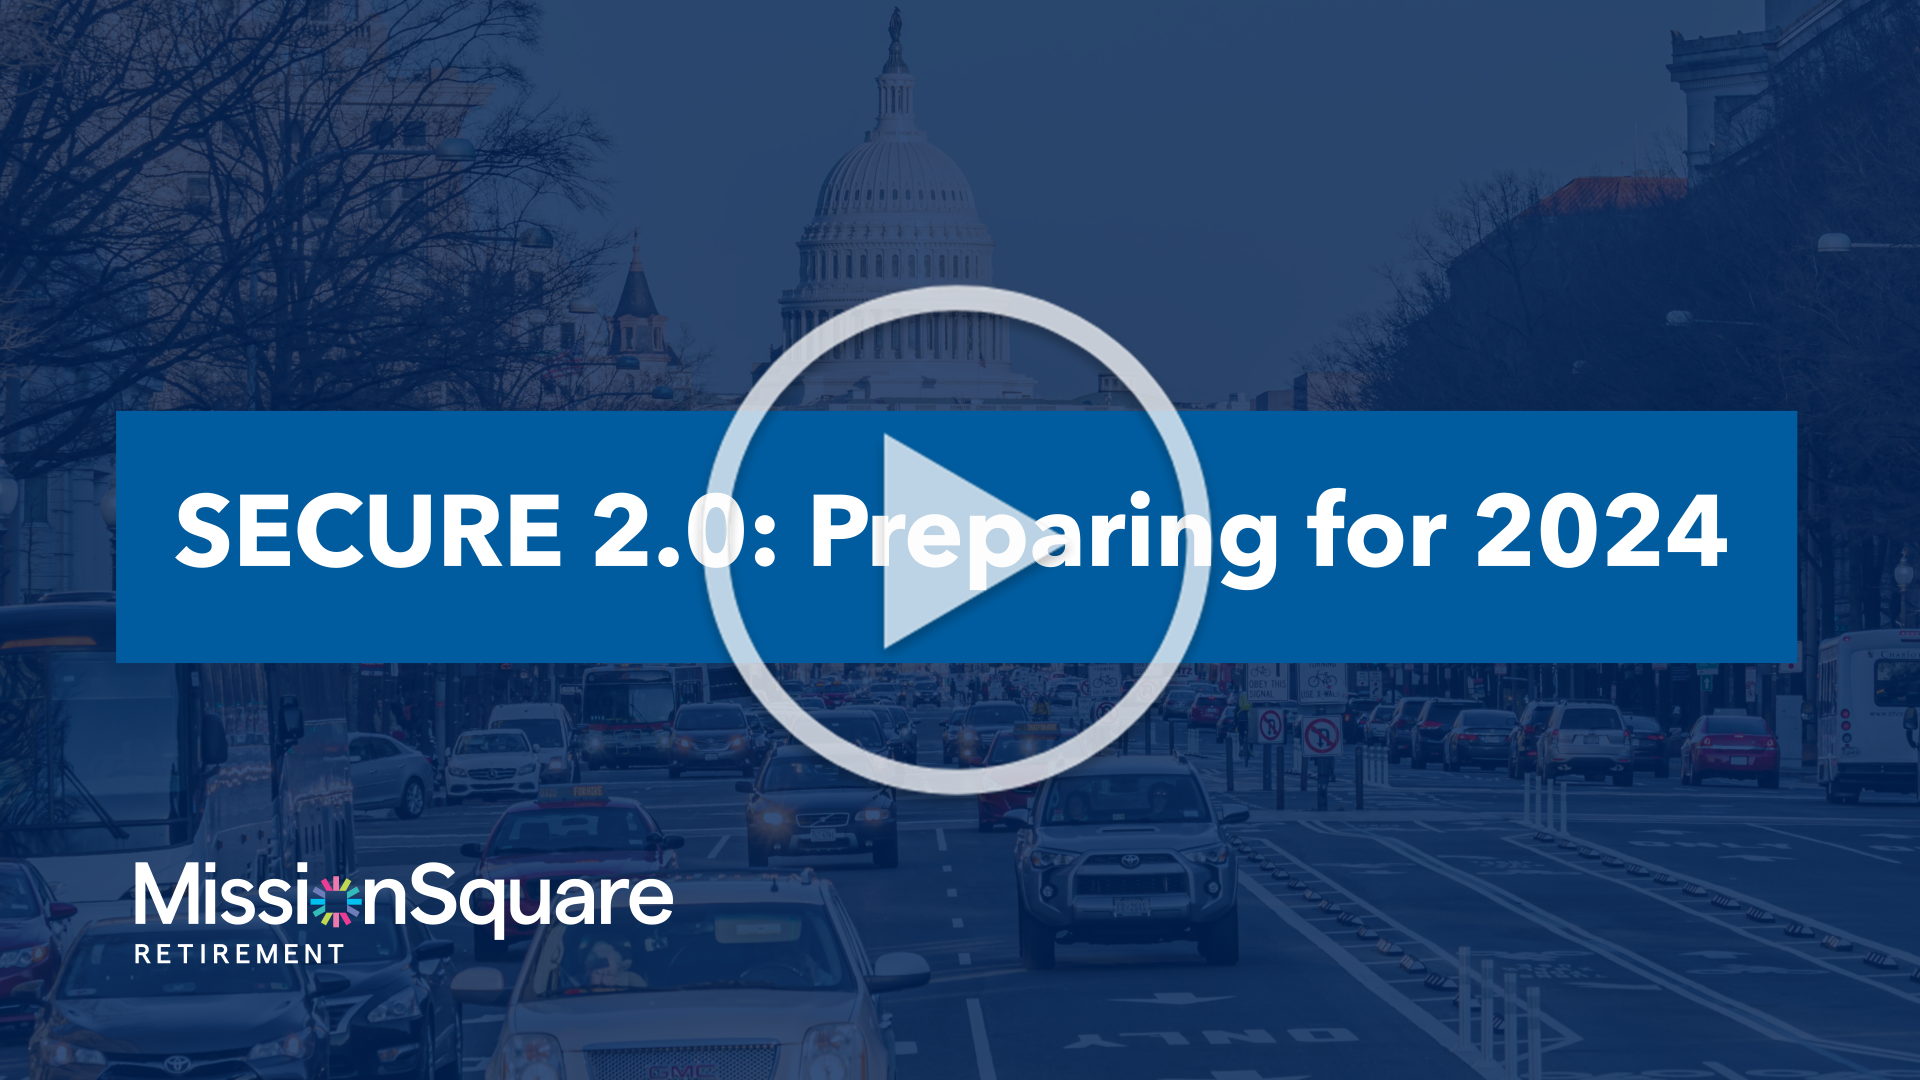 SECURE 2.0: Preparing for 2024